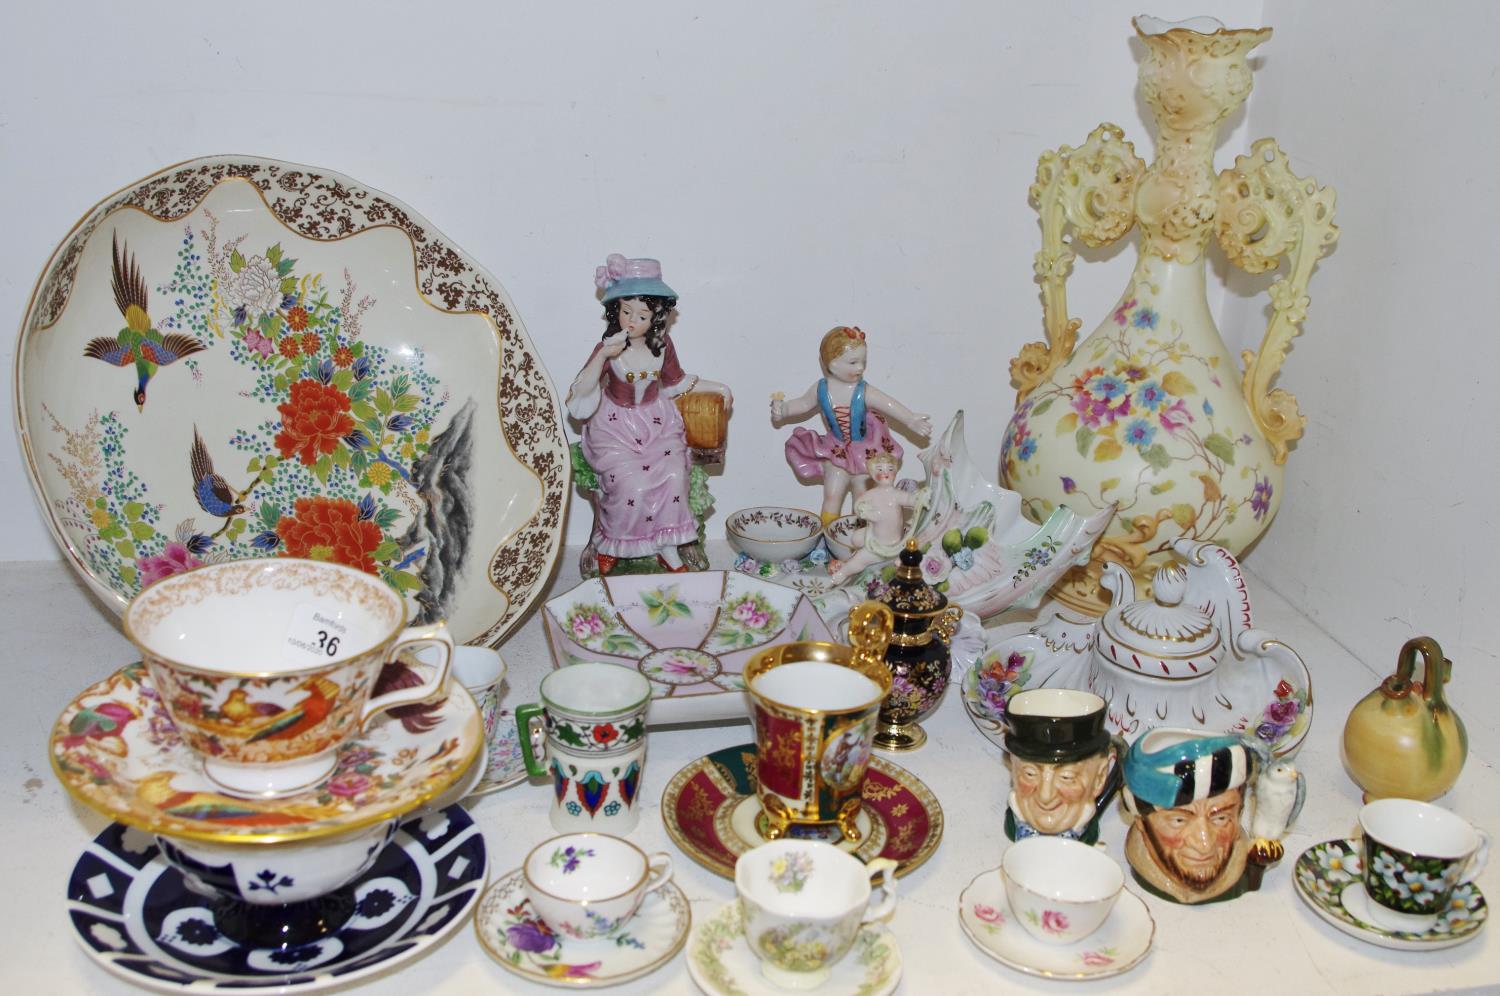 An Augustus Rex 19th century Dresden porcelain figural table salts bowl;